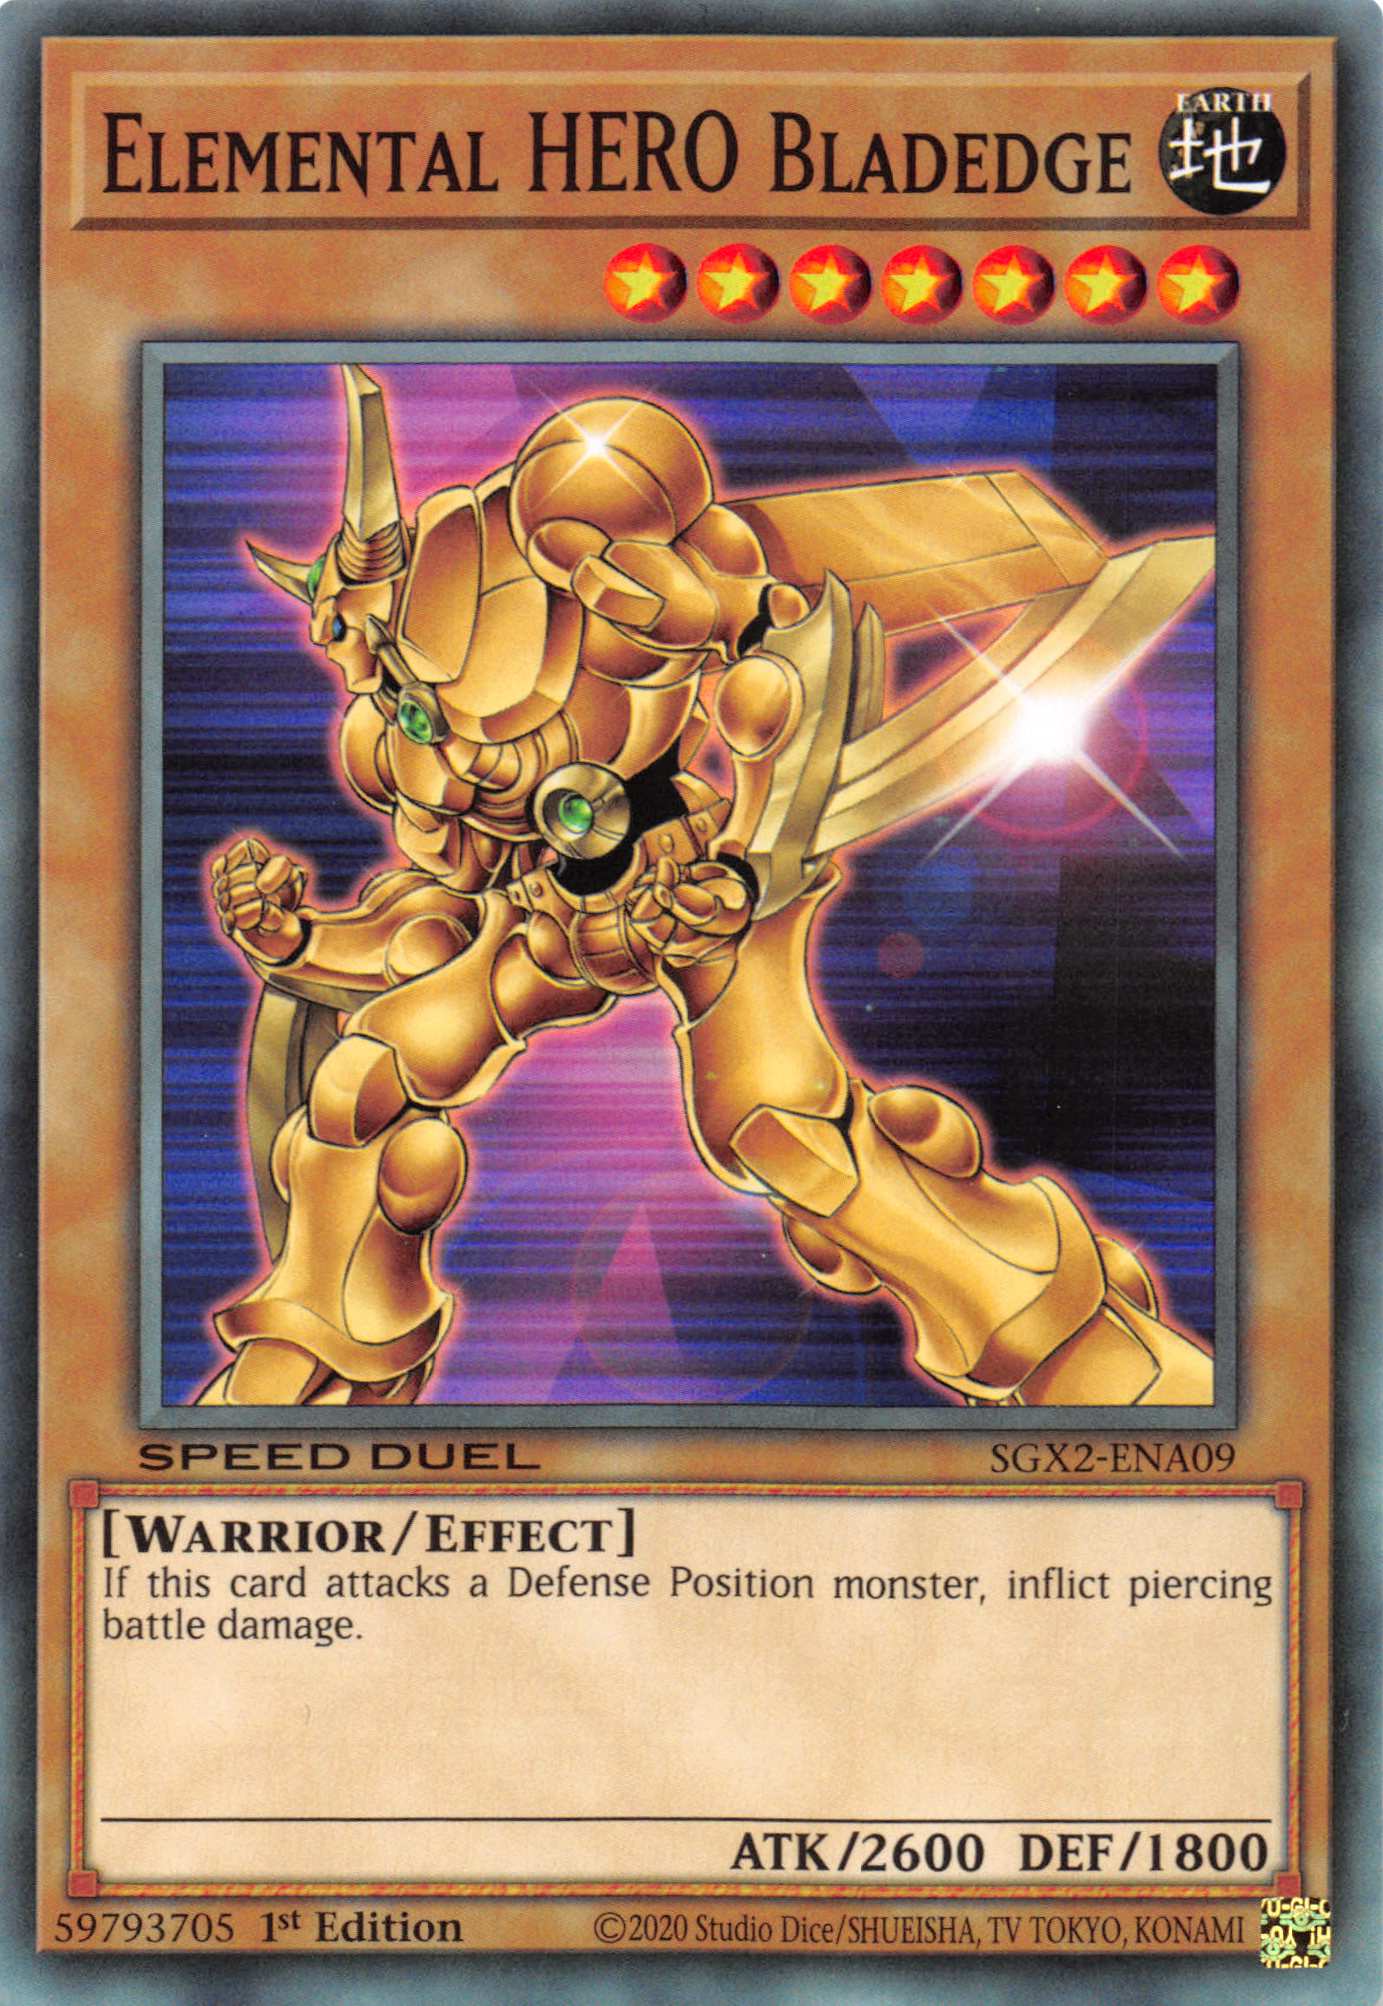 Elemental HERO Bladedge [SGX2-ENA09] Common